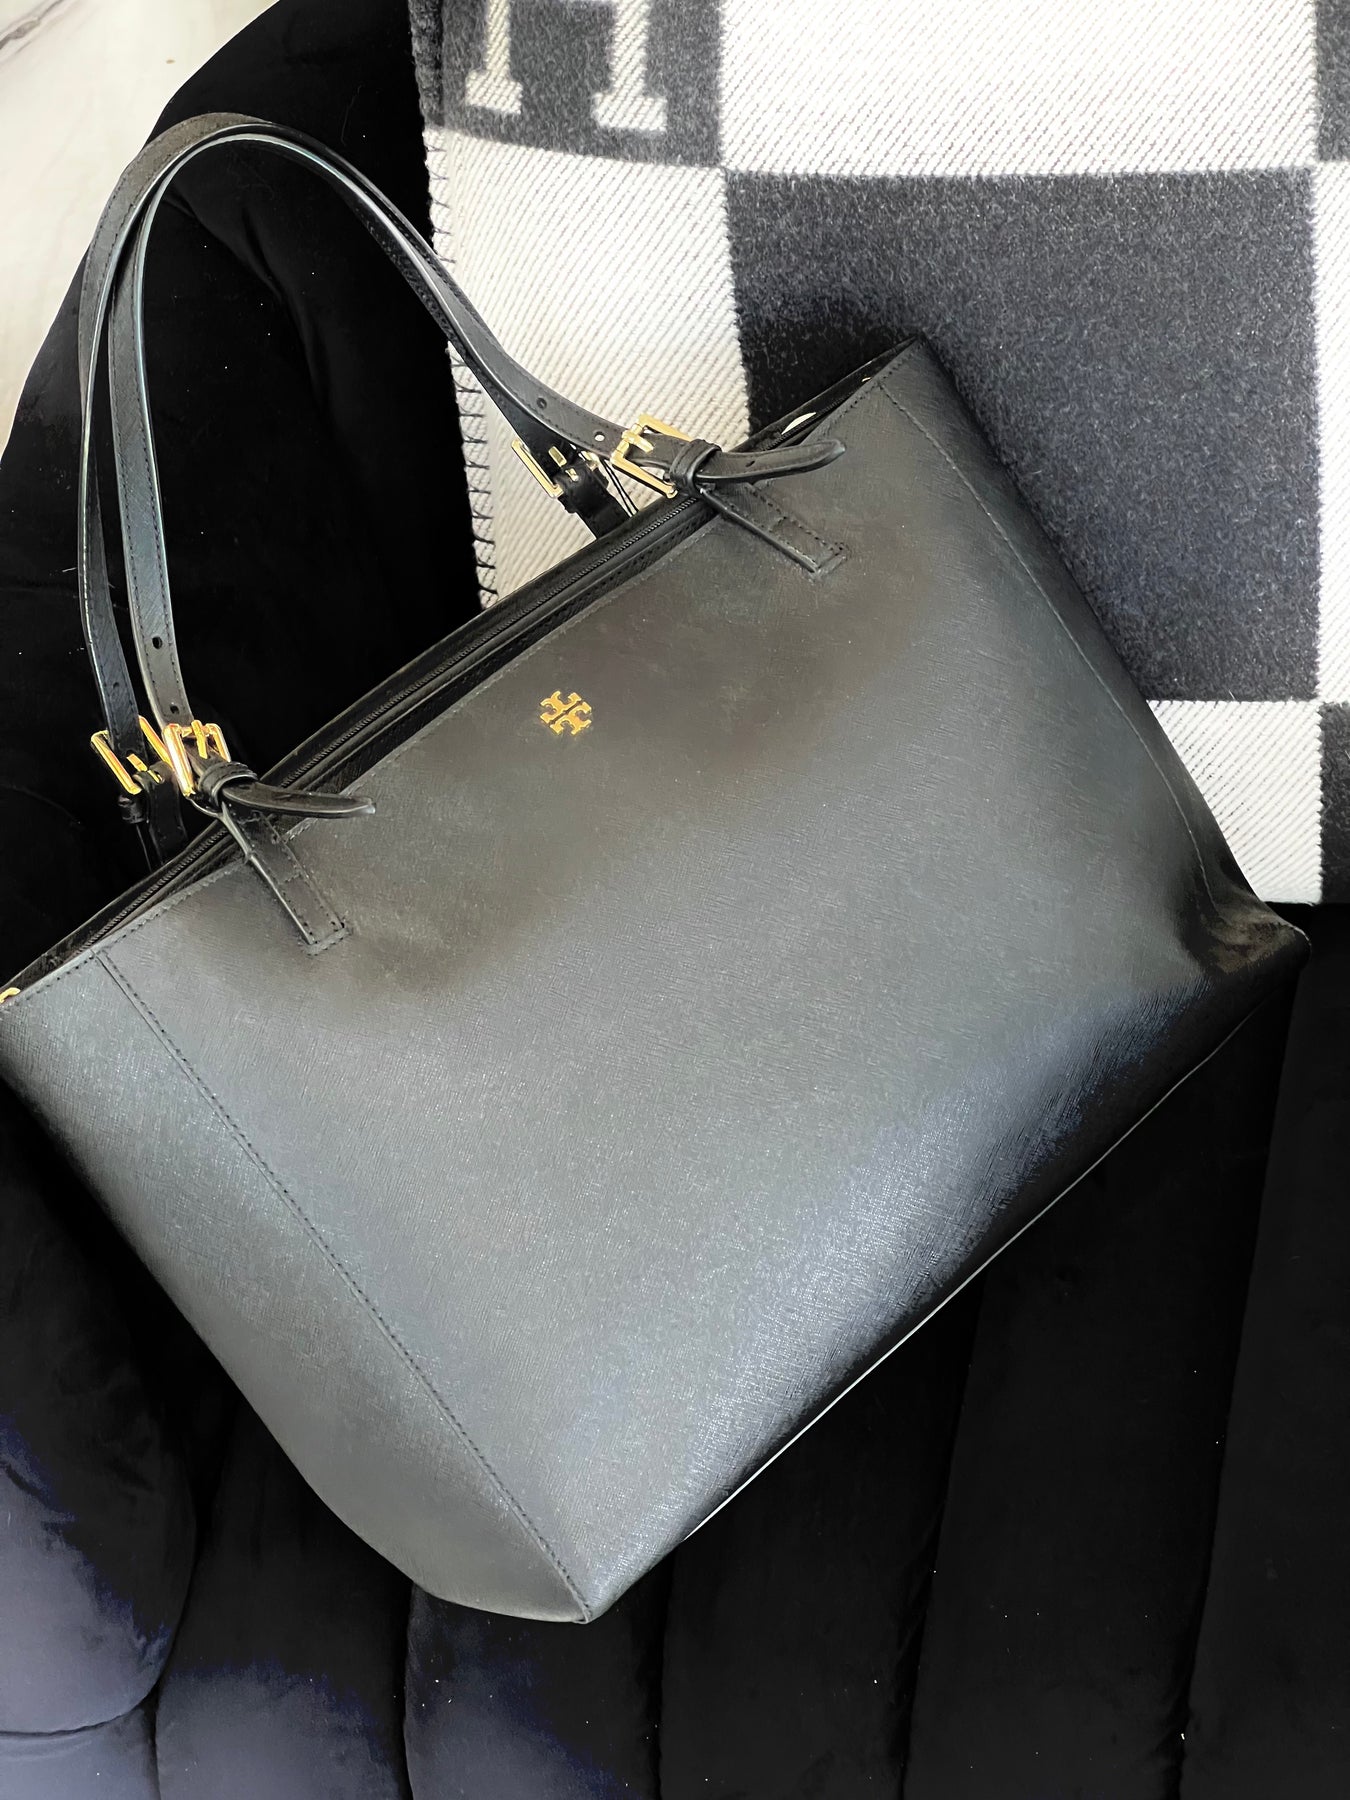 York Buckle Tote: Women's Handbags, Tote Bags